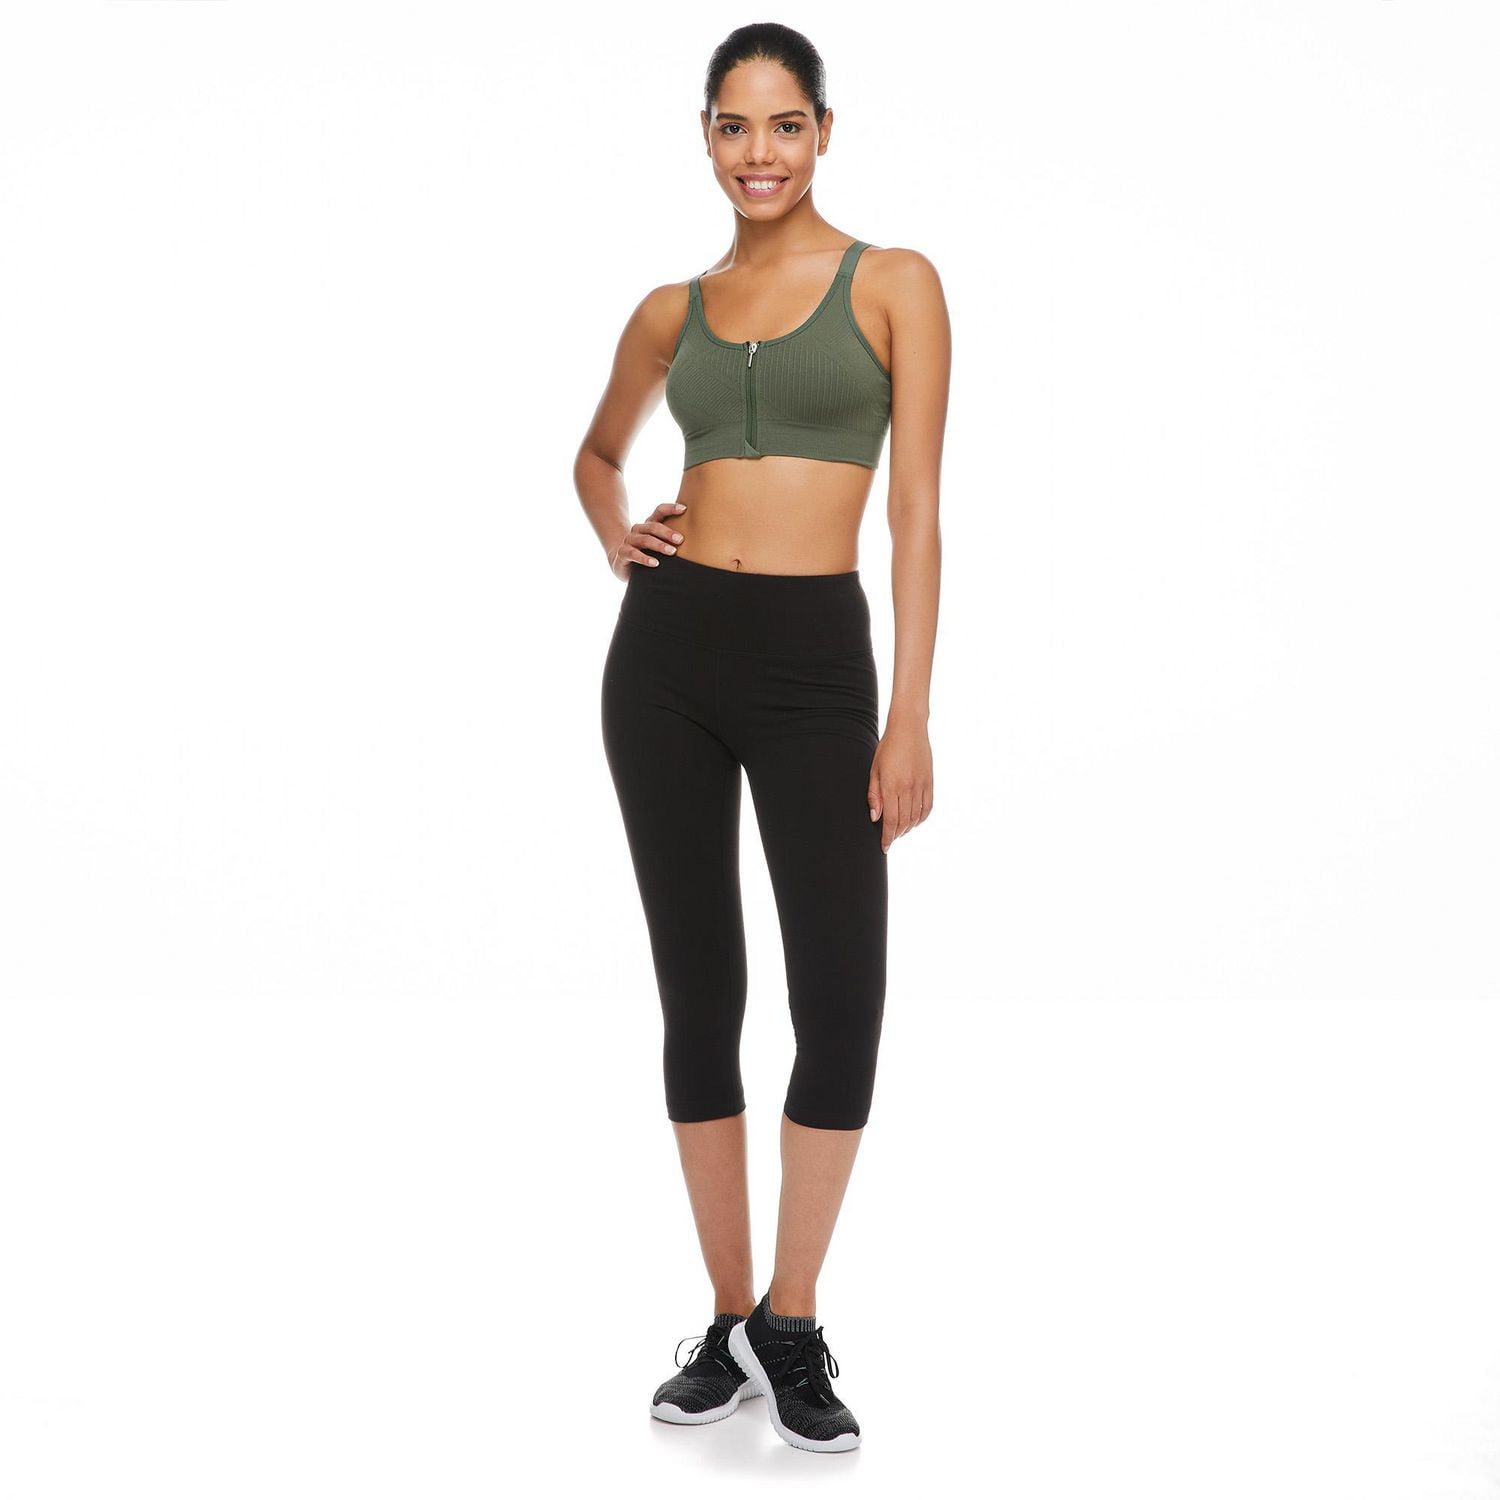 Athletic Works black leggings women's size large(12-14) - $19 - From Melissa